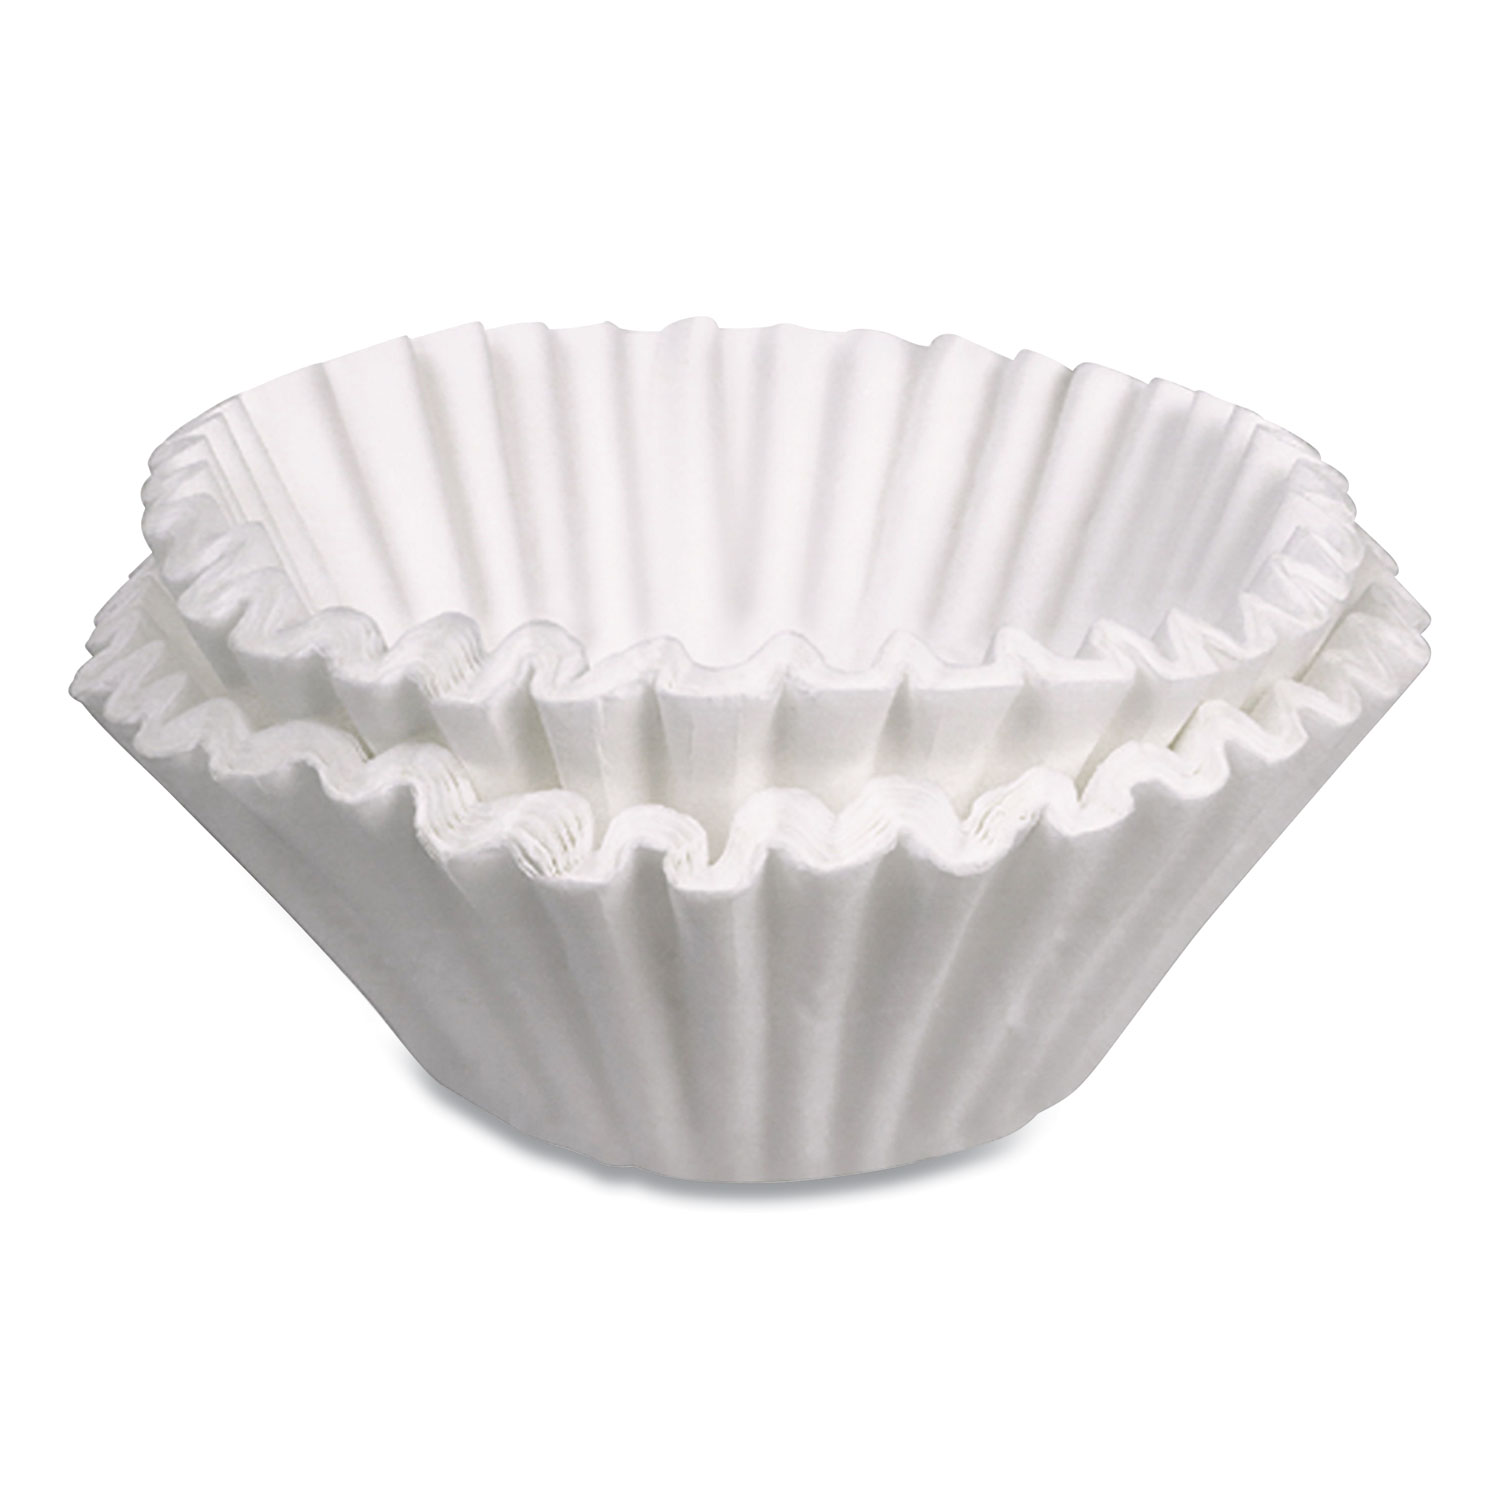 BUNN® Coffee Filters, 12-Cup Size, White, 3000/Carton